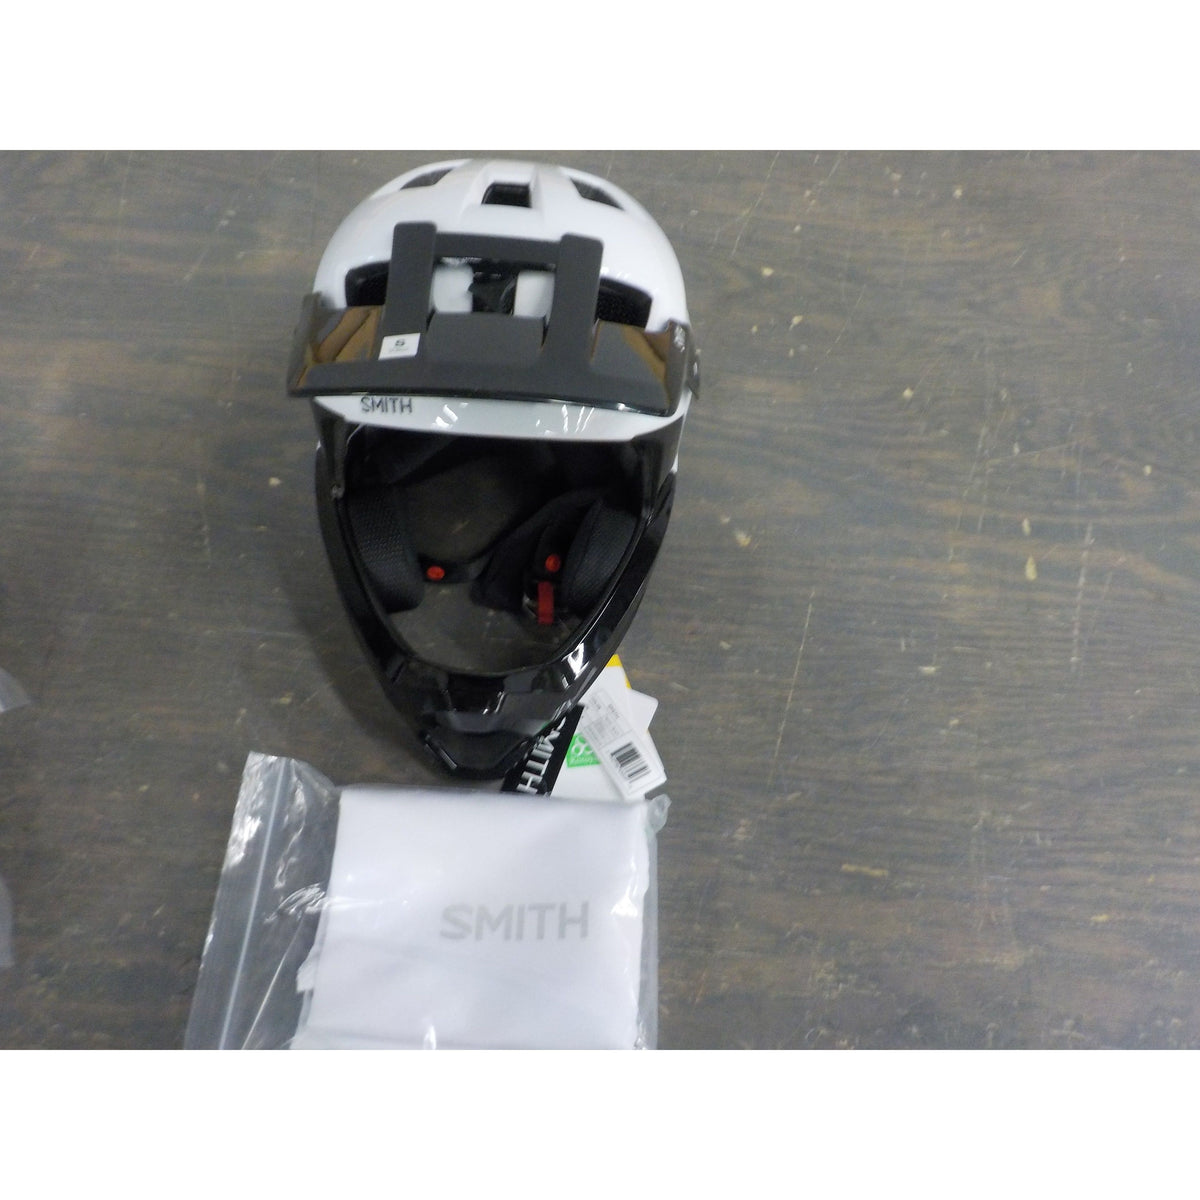 Smith Optics Mainline MIPS Bike Helmet - White/Black - Small - Used - Acceptable